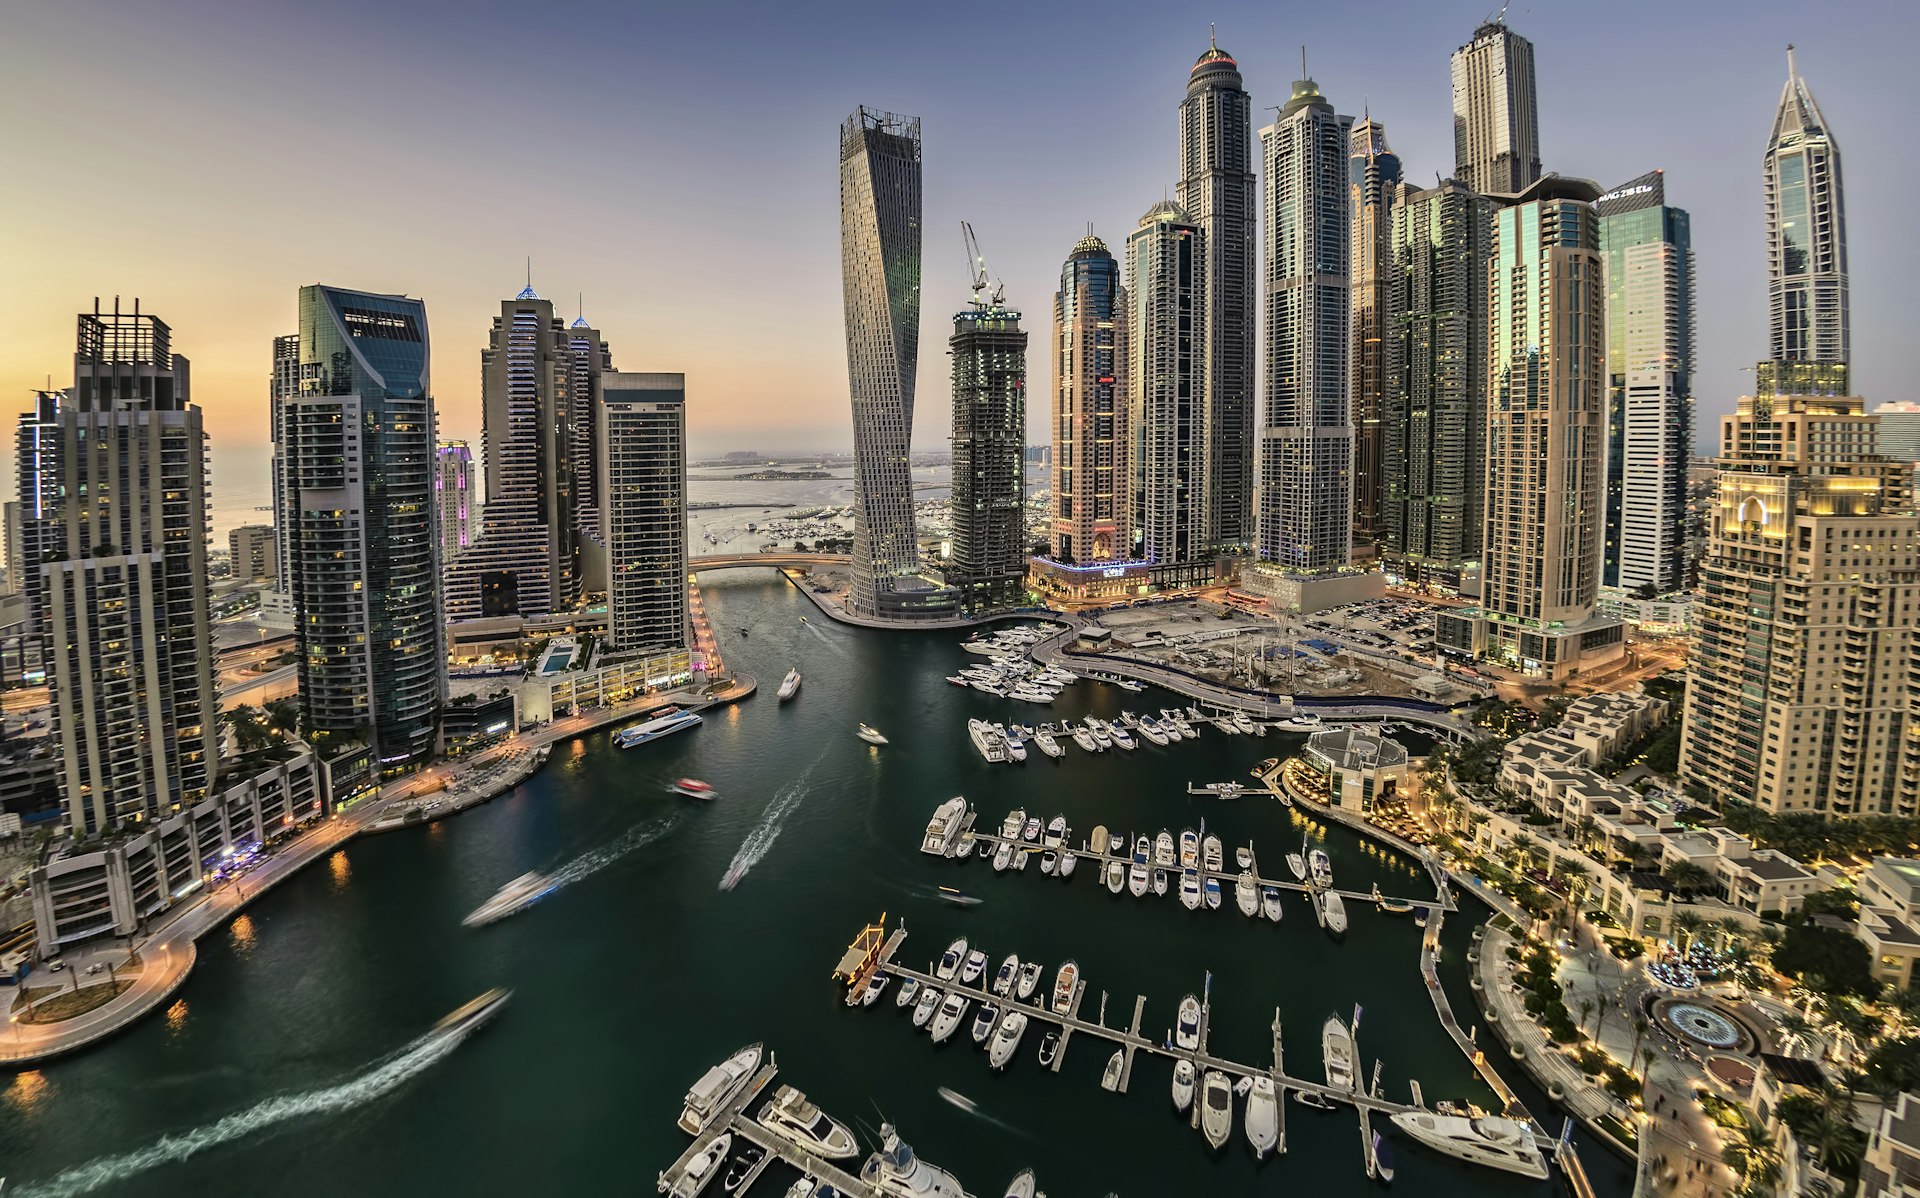 Dubai Marina in the evening